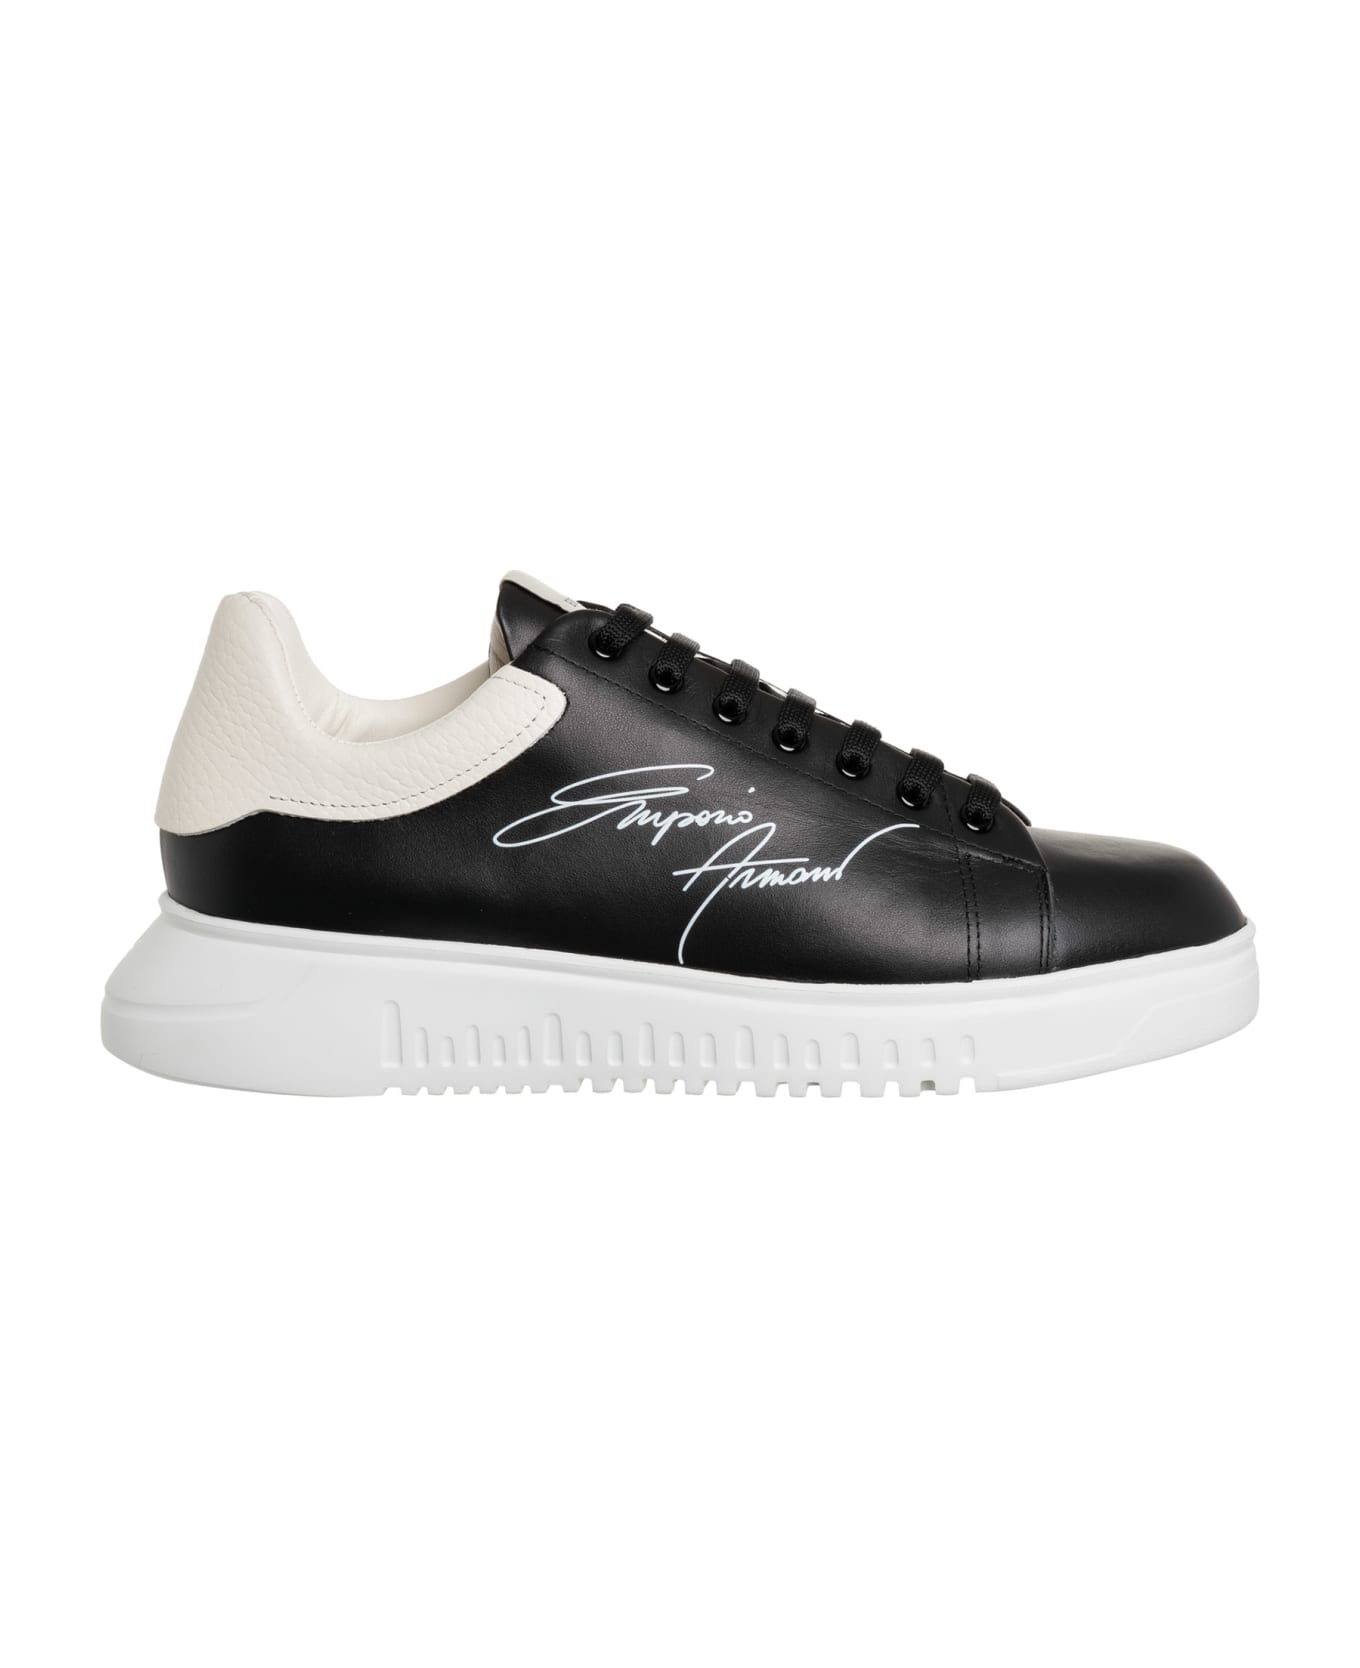 Emporio Armani Leather Sneakers - Black